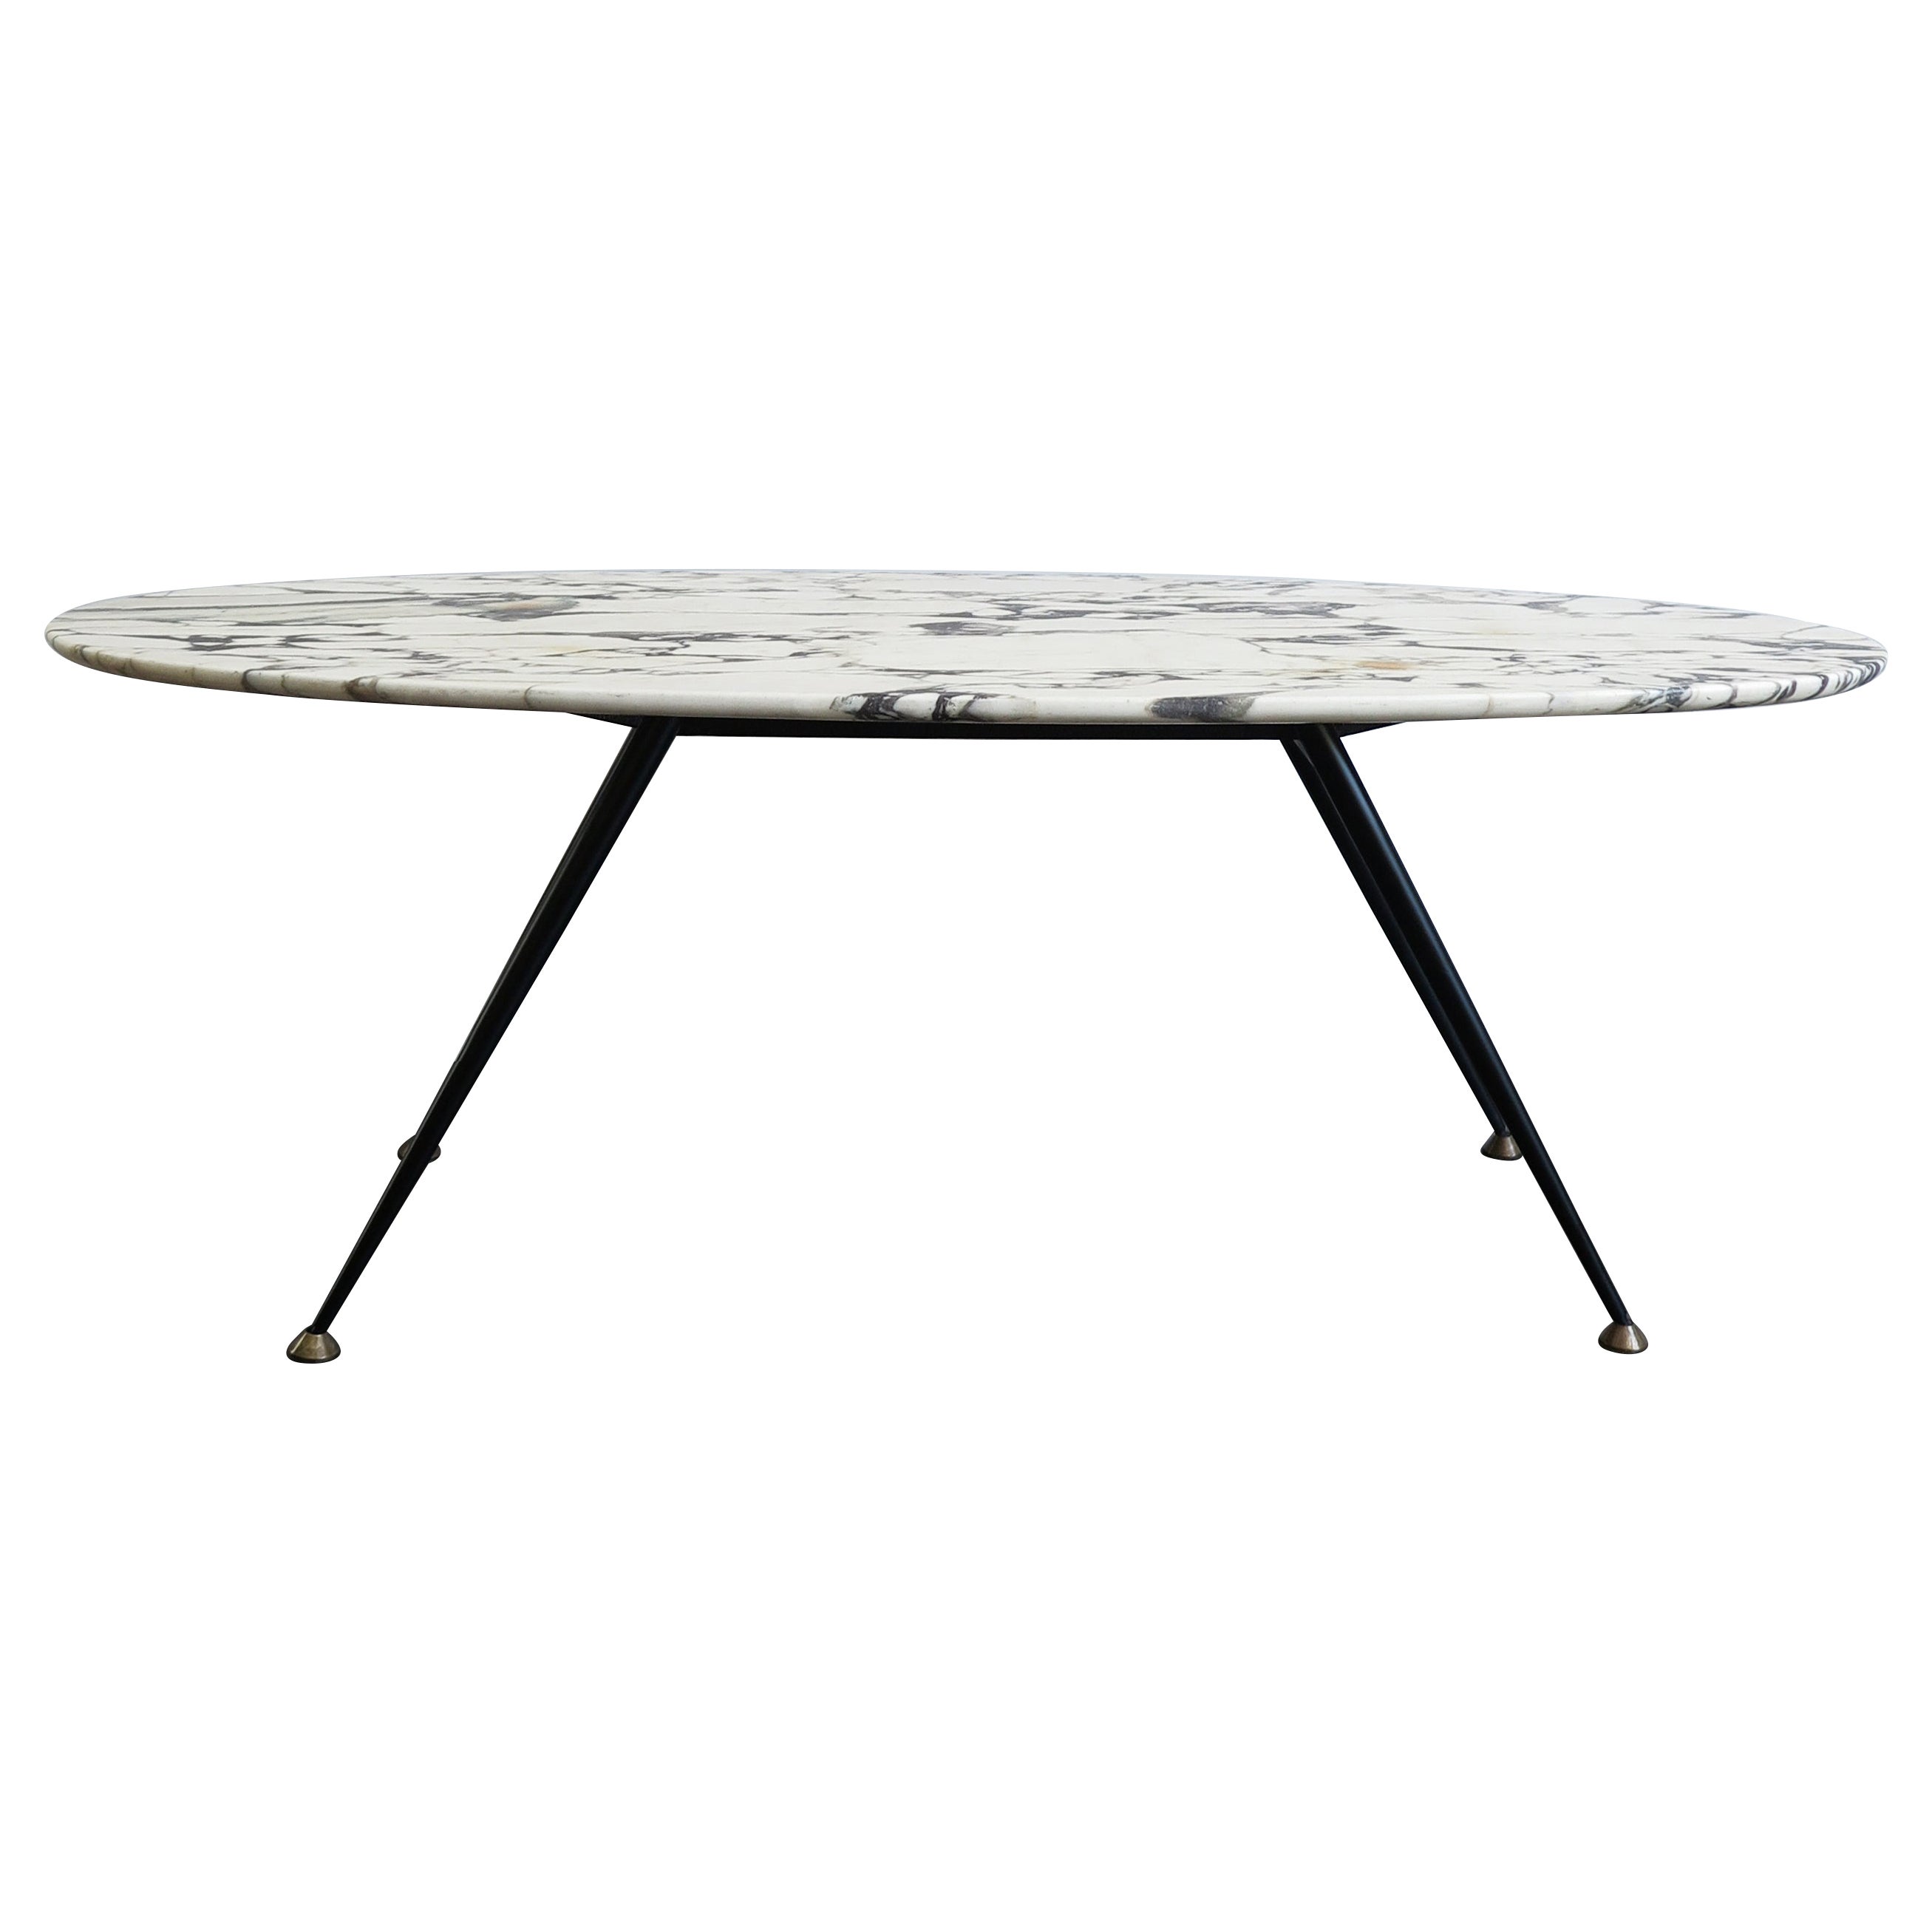 Italian Mid-Century Modern Design Marble Oval Coffe Table, 1950s